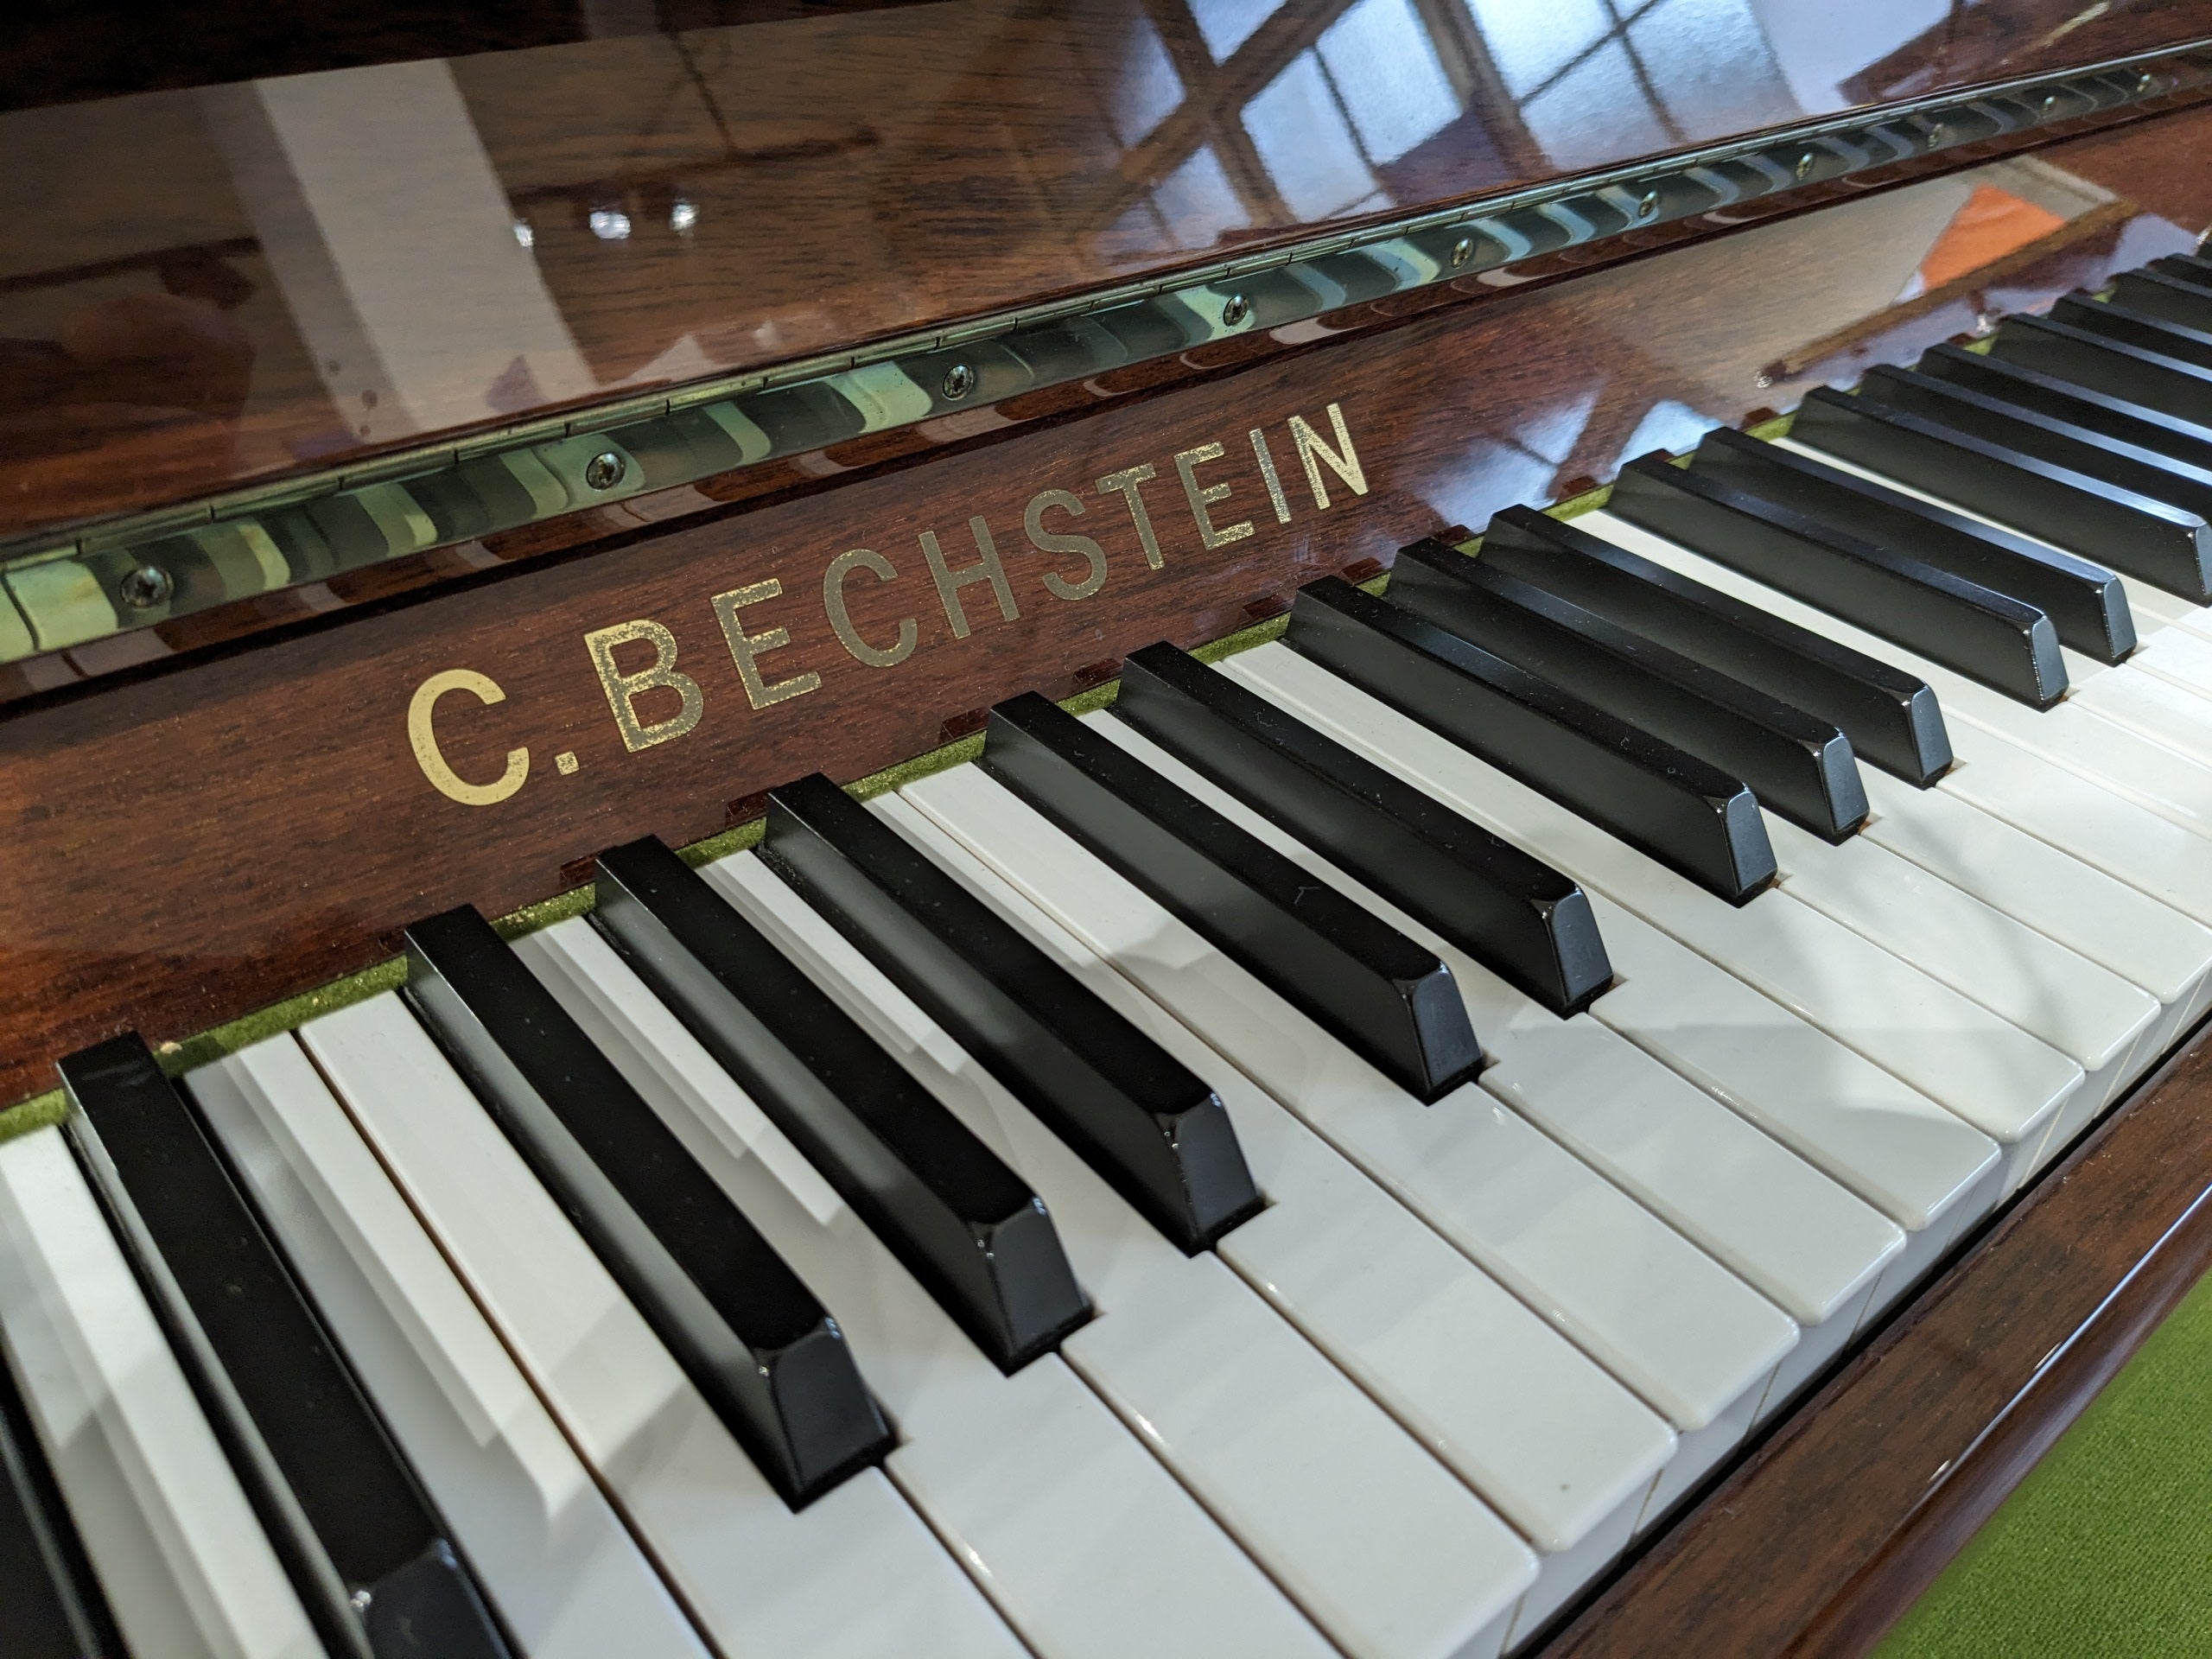 C.Bechstein Contur 118 Upright Piano Mahogany Gloss (Secondhand)